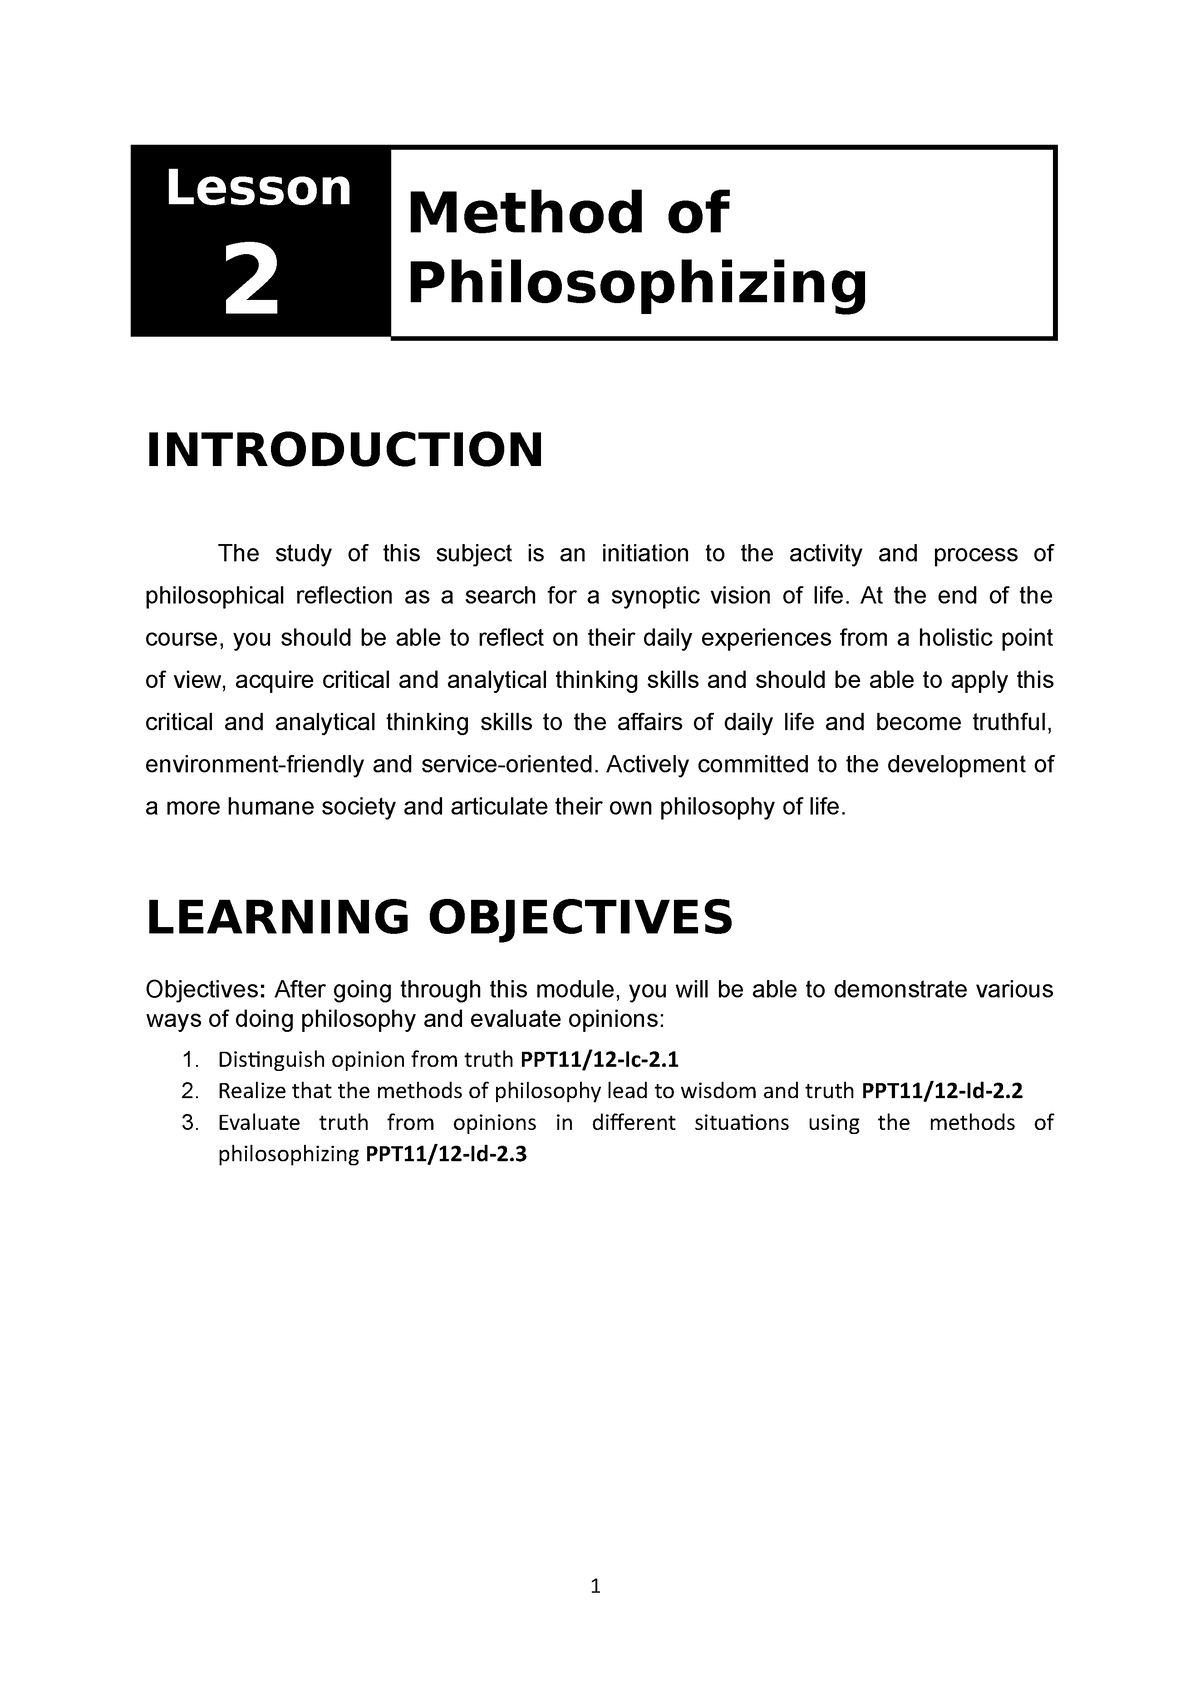 methods of philosophizing essay